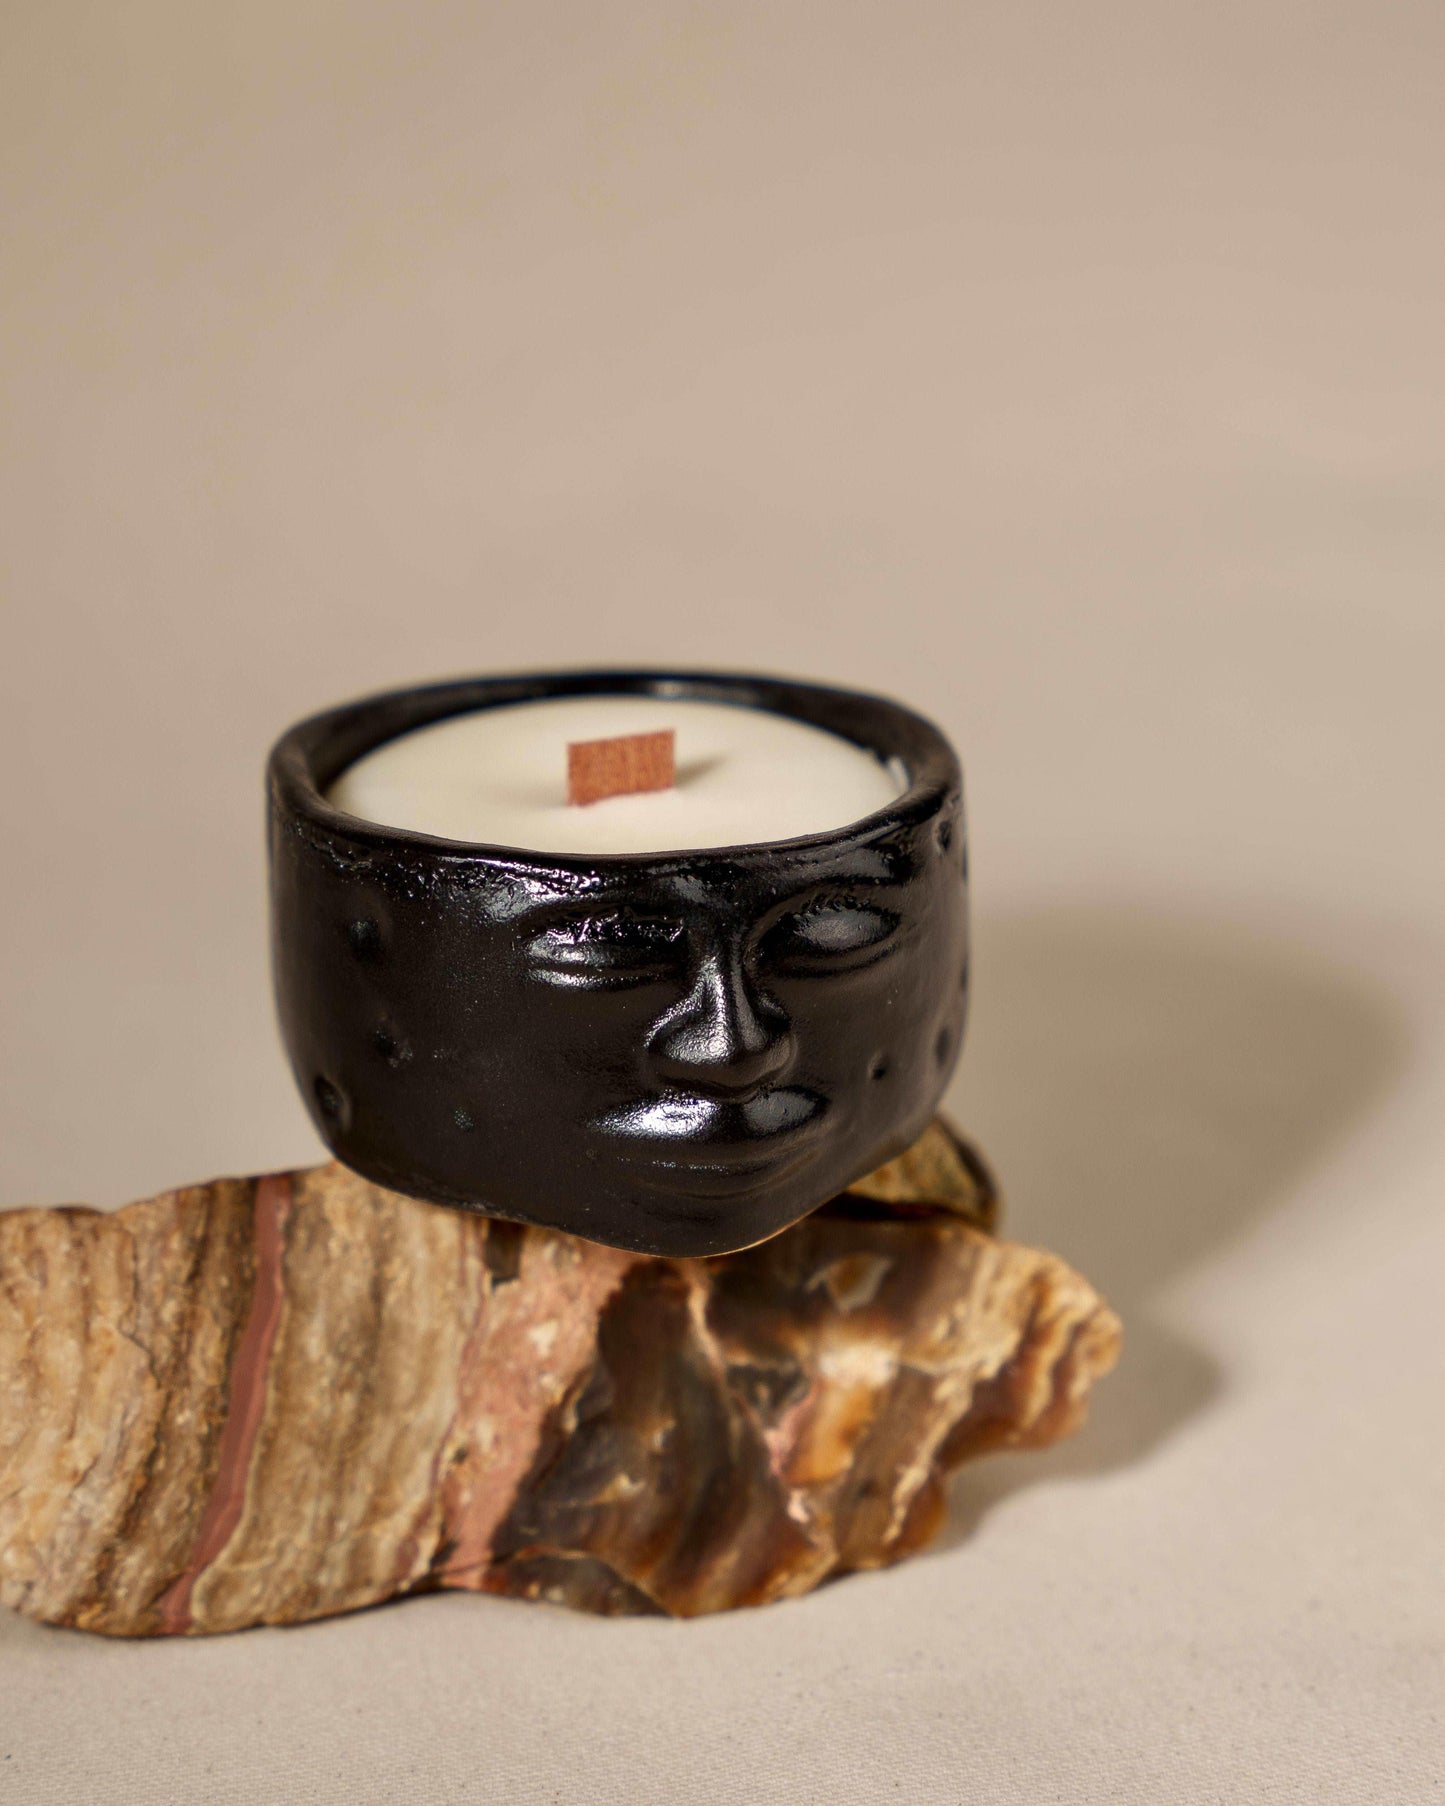 Oberon Moon Jar Candle - Scented, Black color